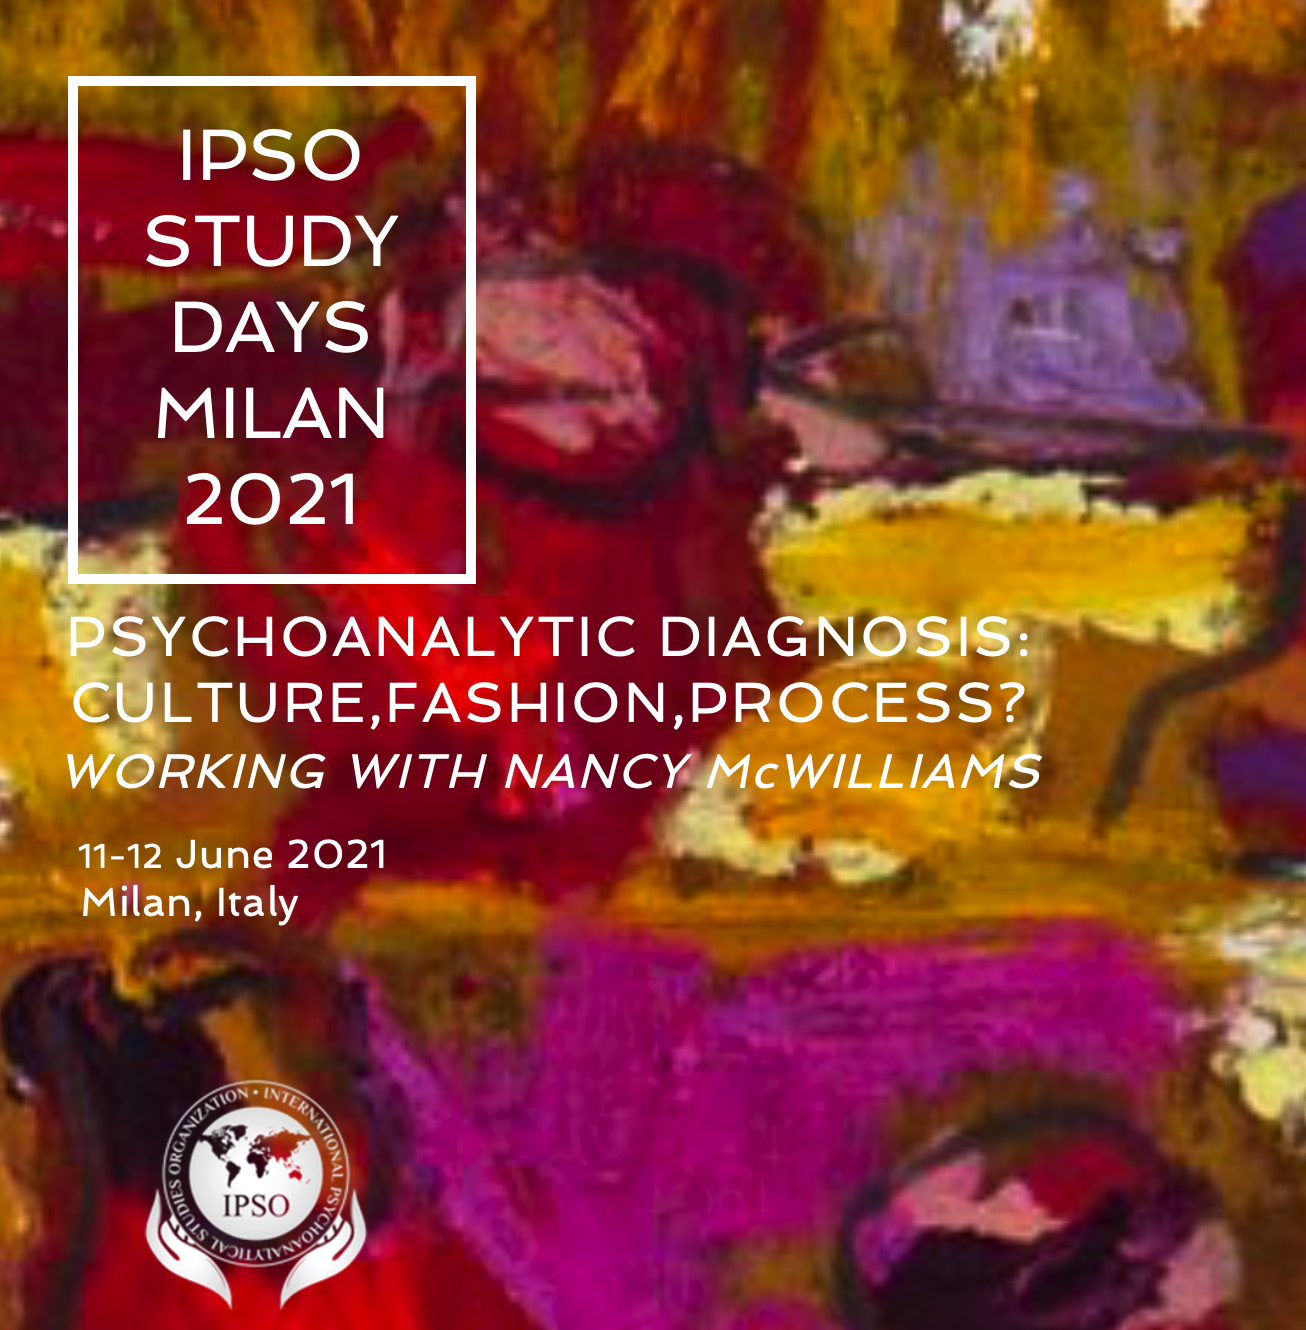 IPSO Study Days Milan 2021